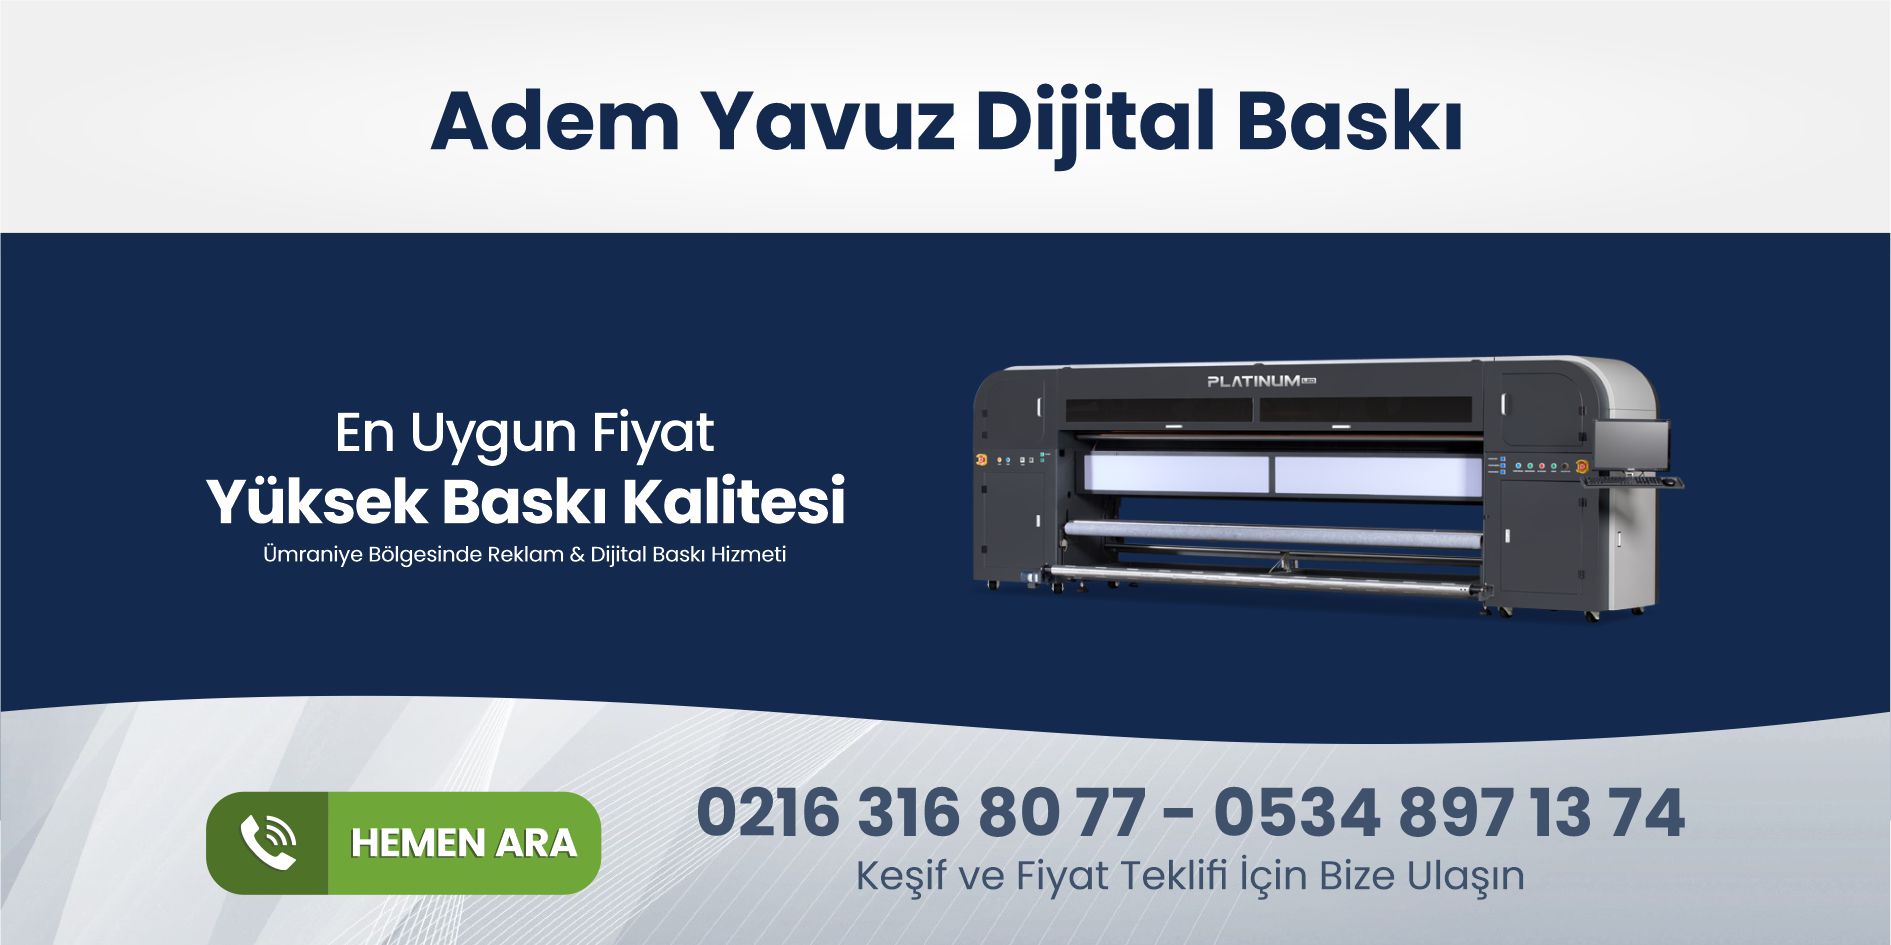 You are currently viewing Adem Yavuz Dijital Baskı